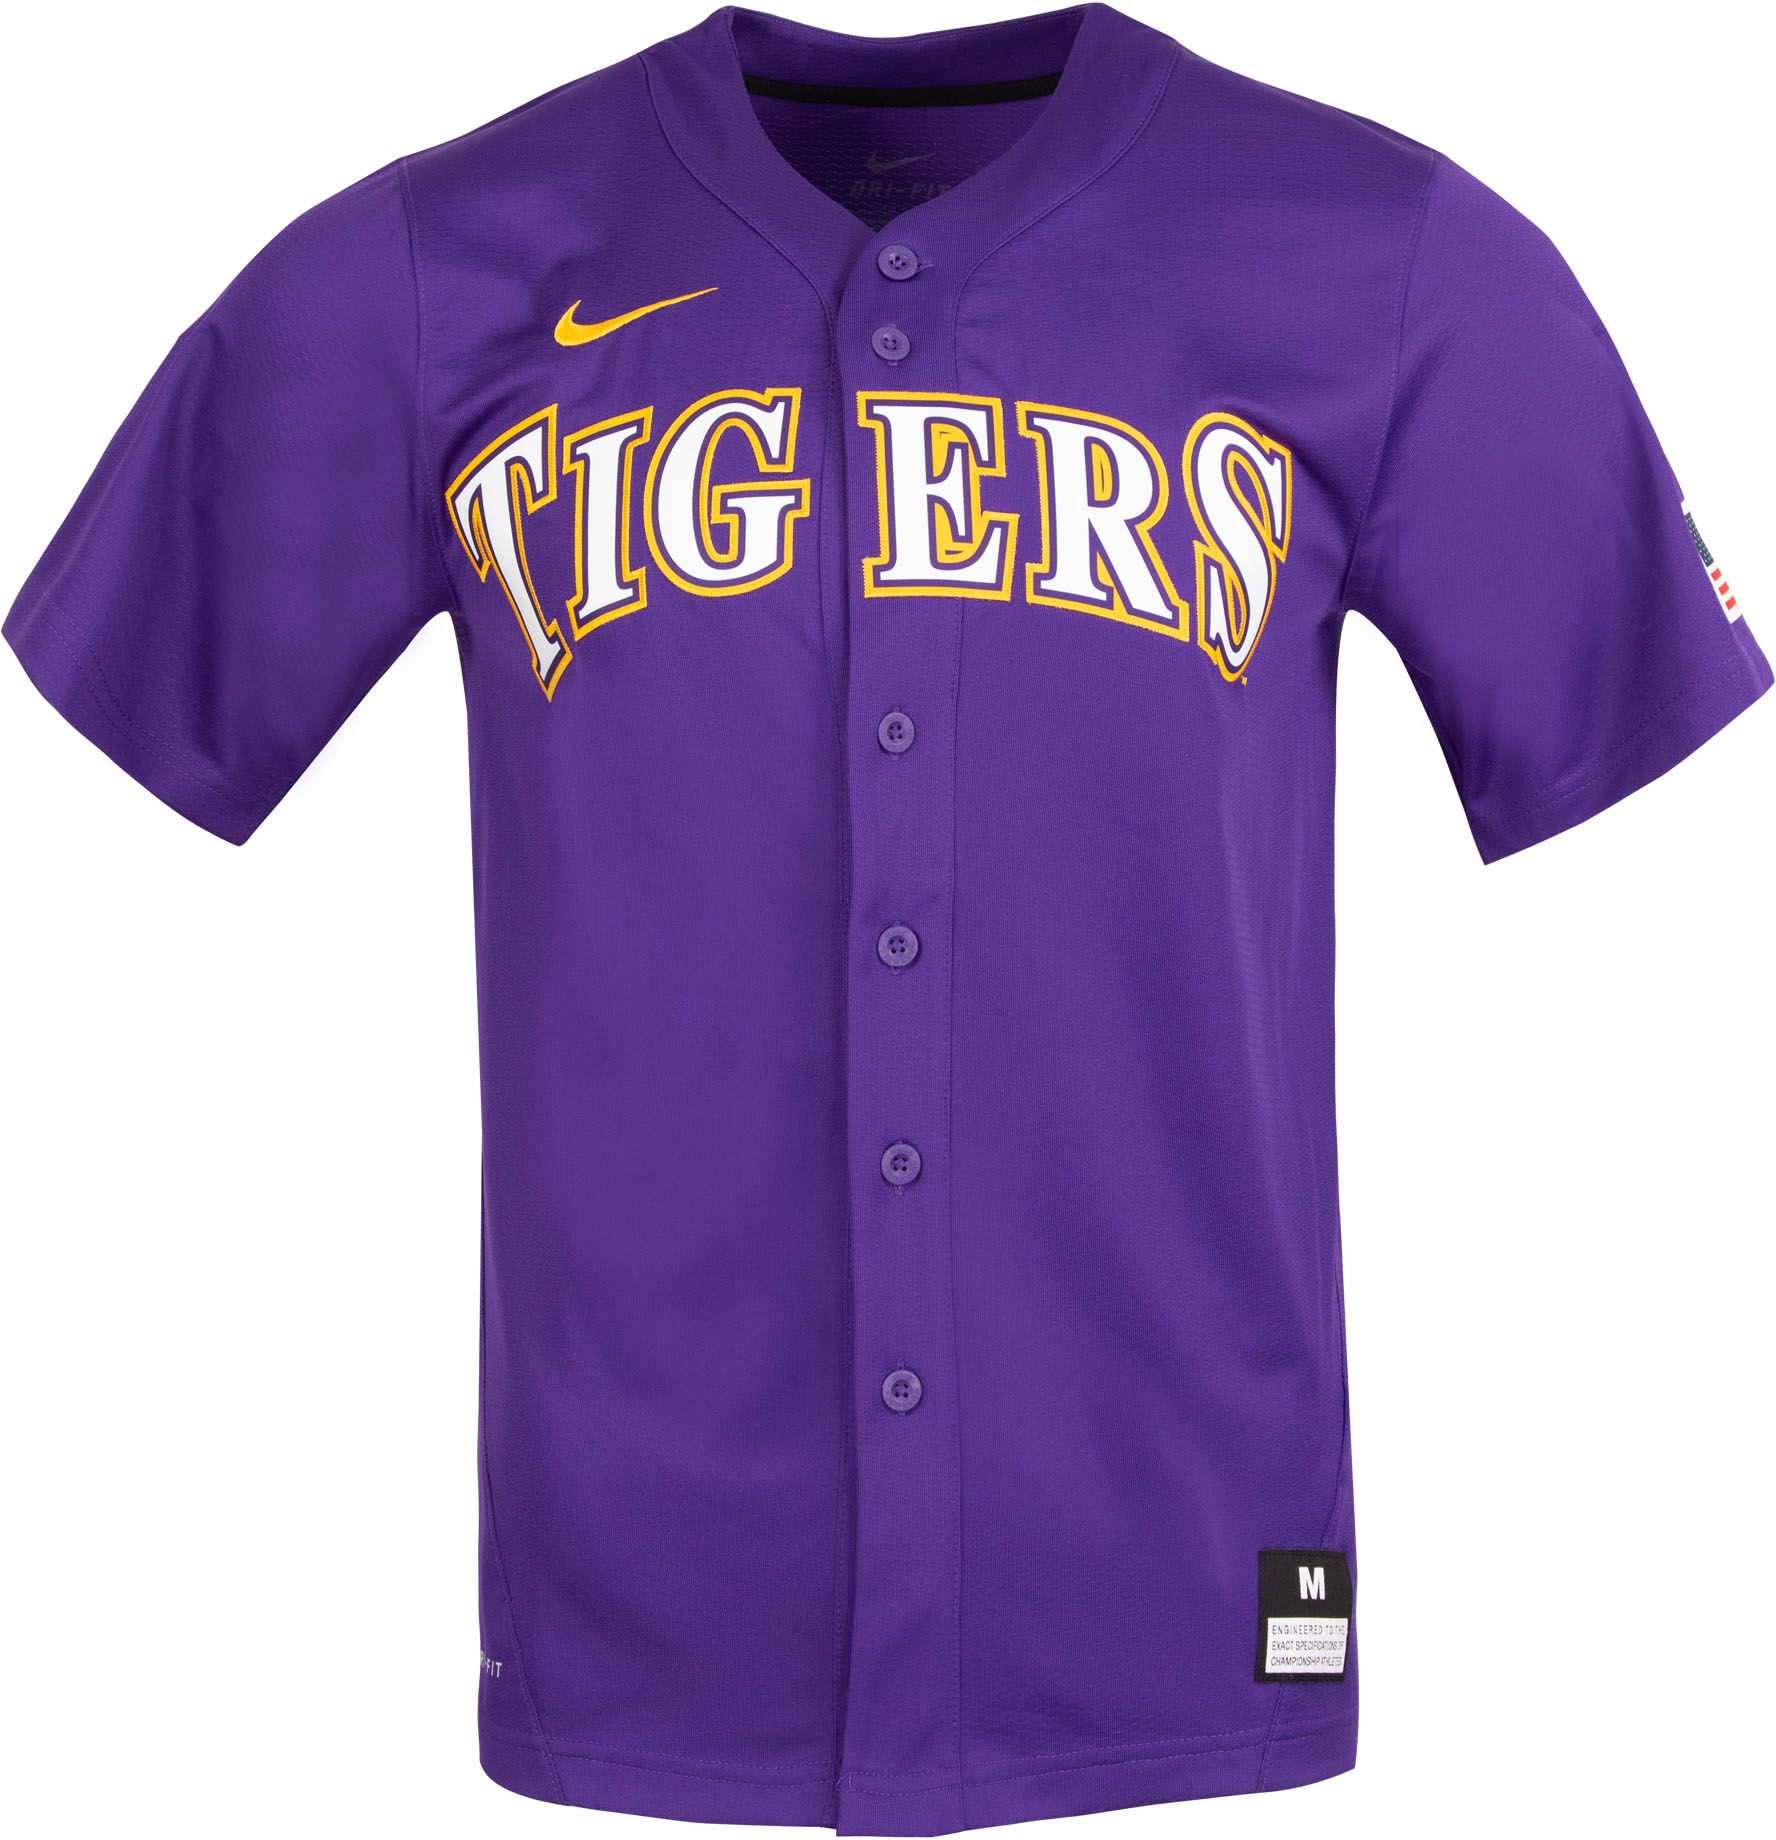 Nike / Men's LSU Tigers Purple Full Button Replica Baseball Jersey